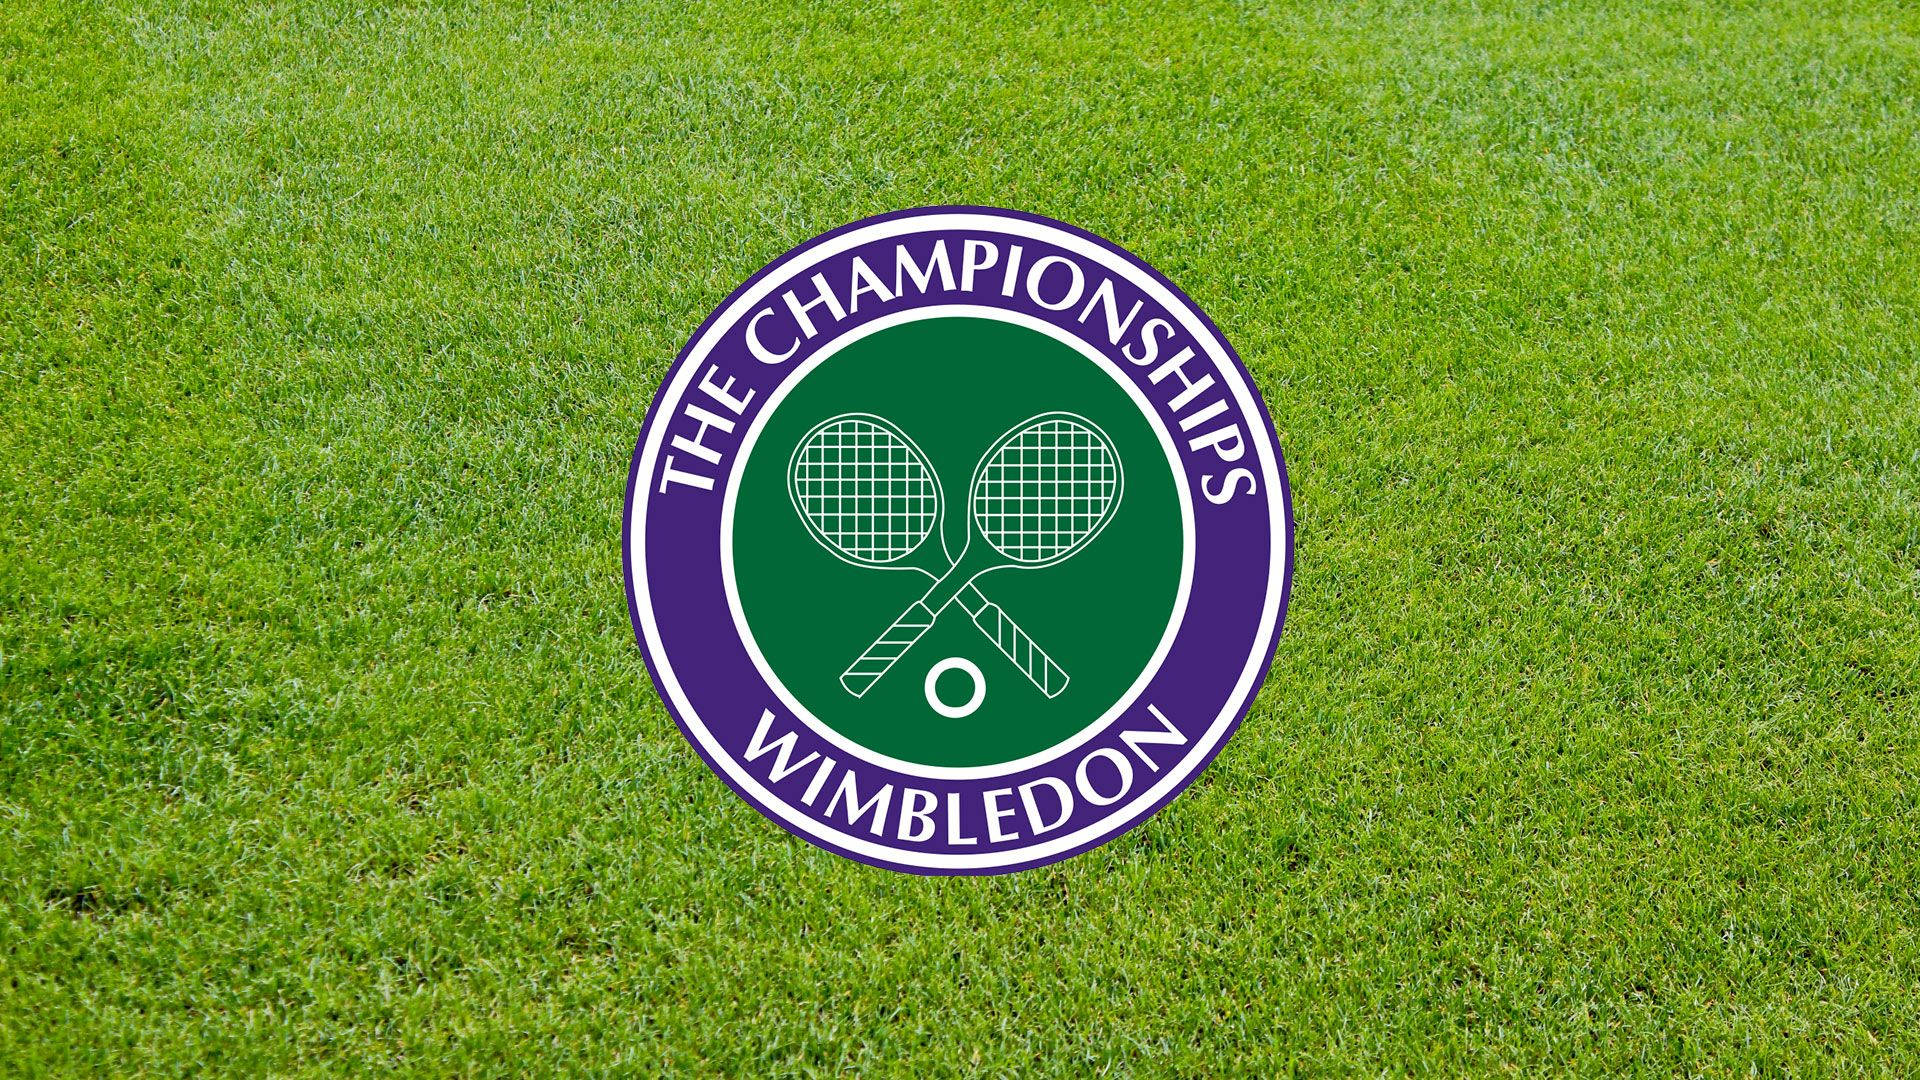 Wimbledon Logo Illustration In Grass Field Background